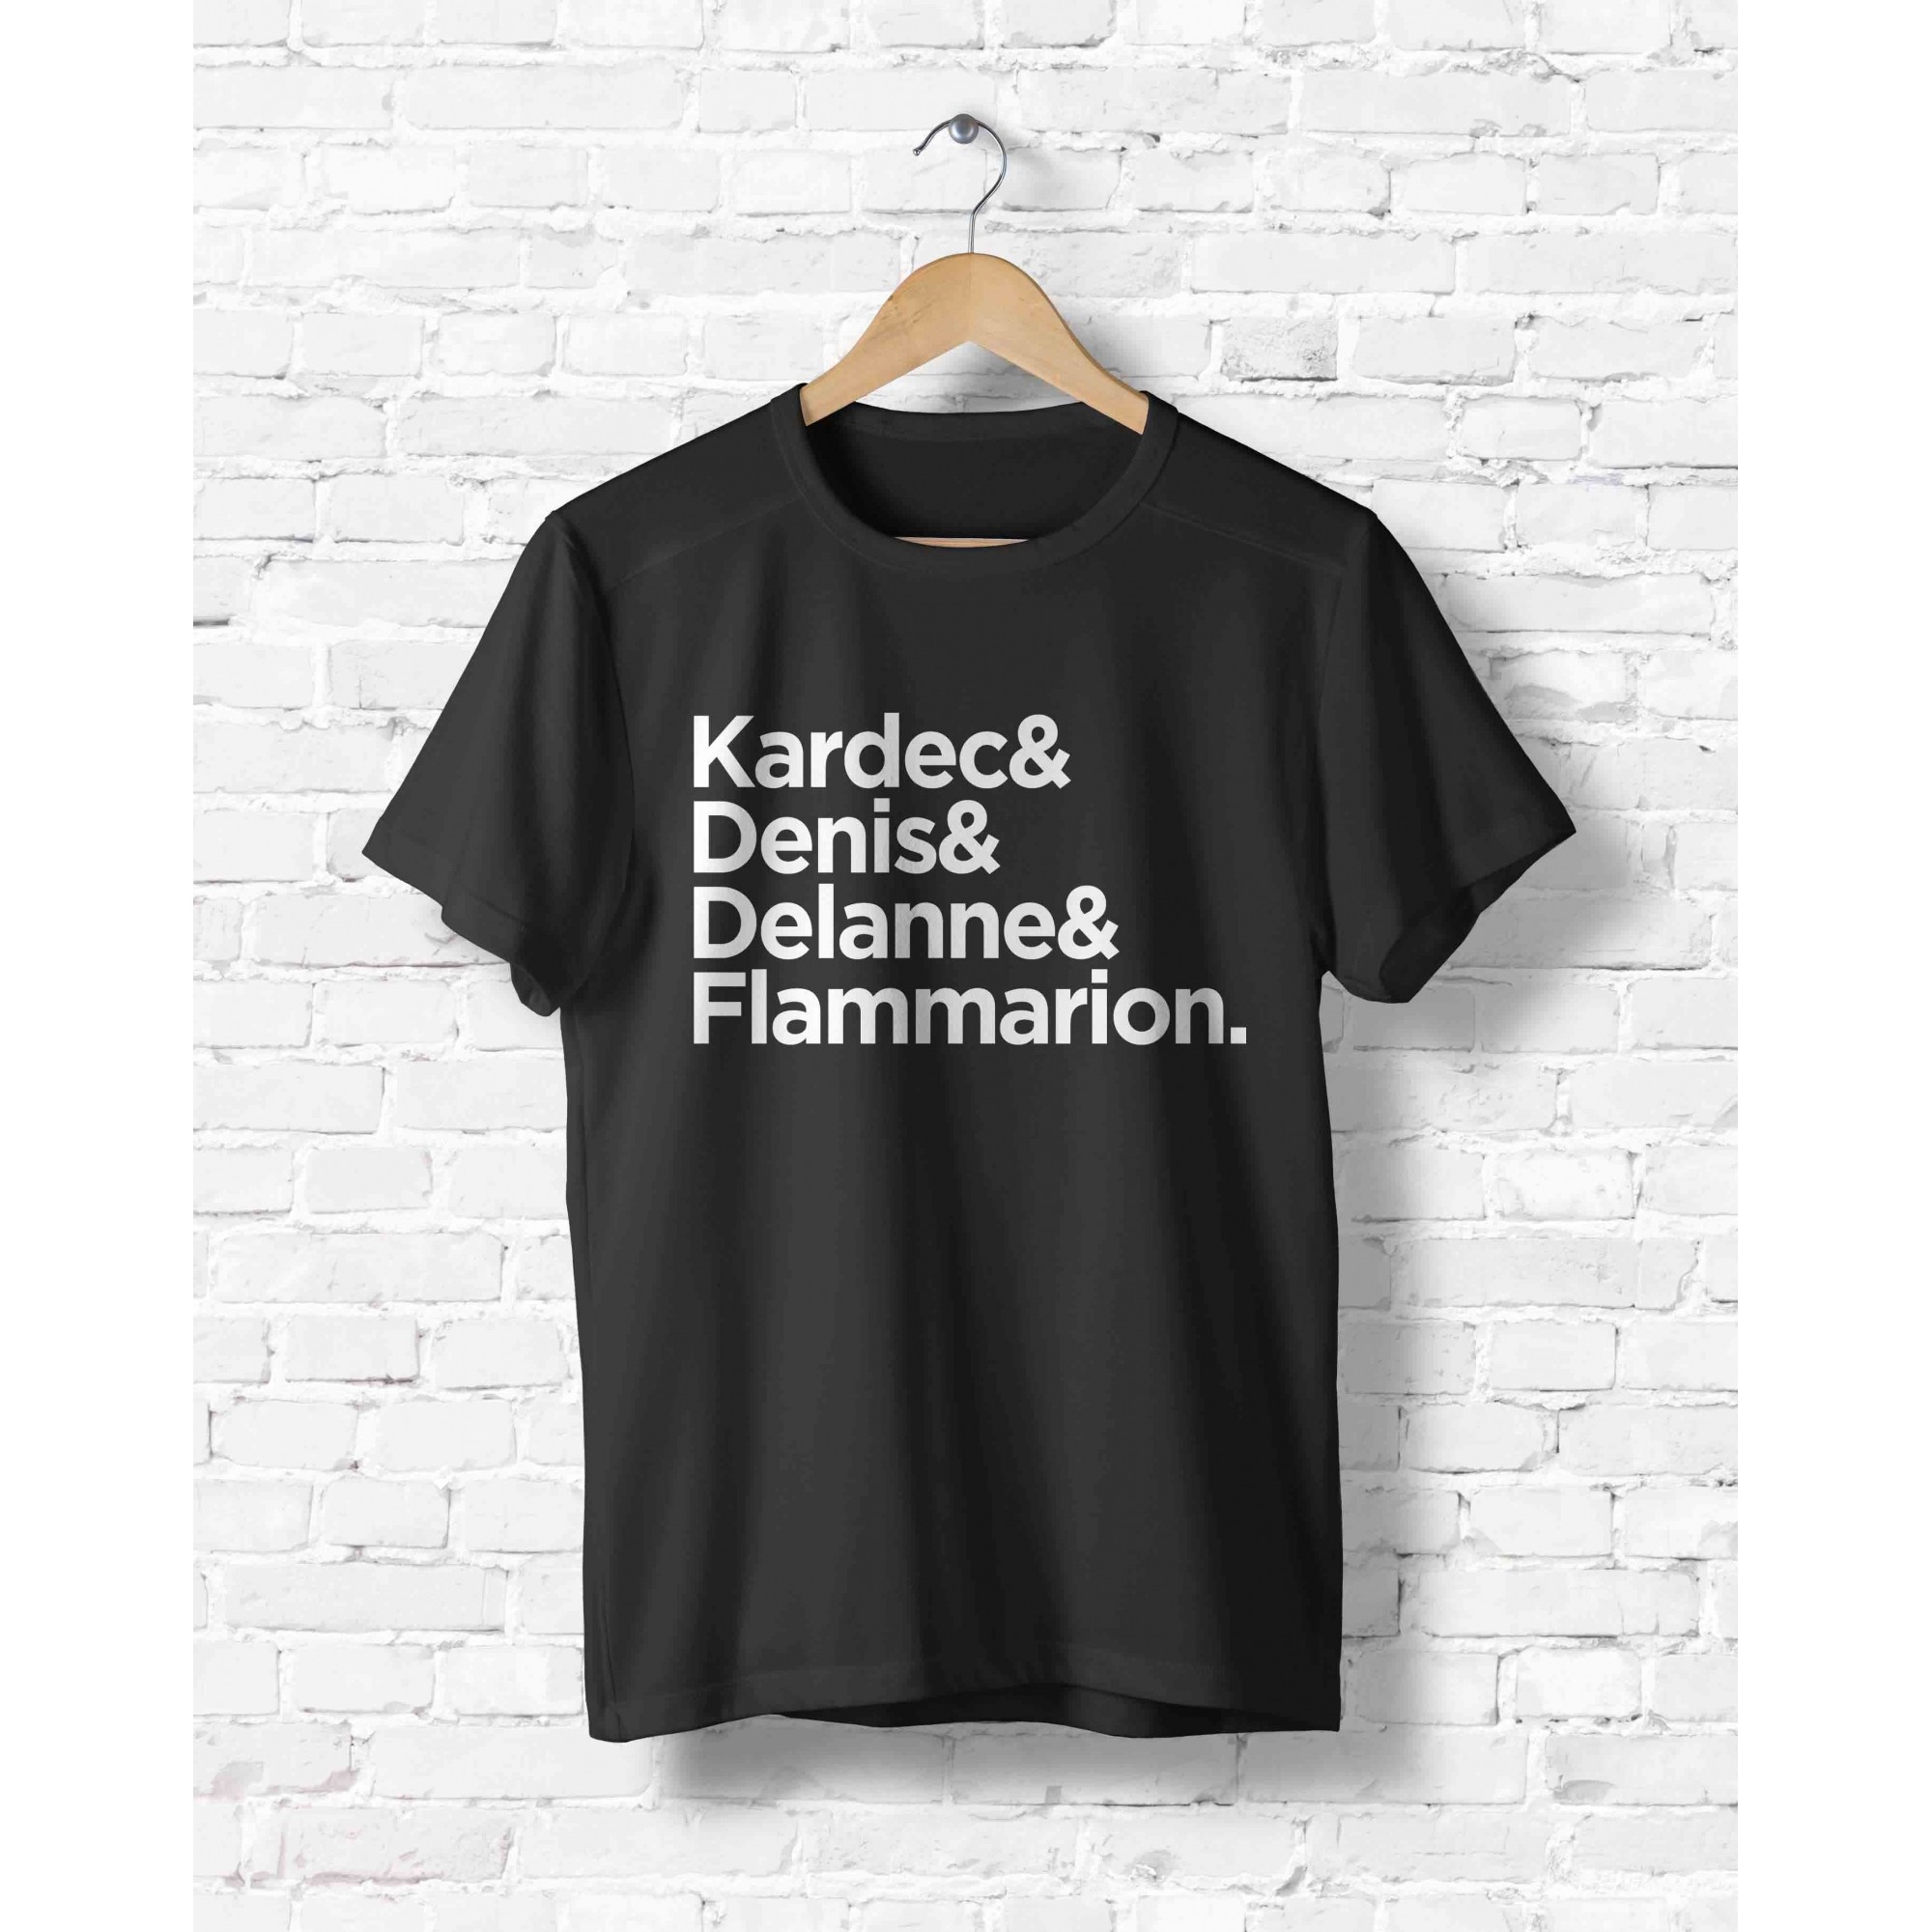 Camiseta Kardec & Denis & Delanne & Flammarion